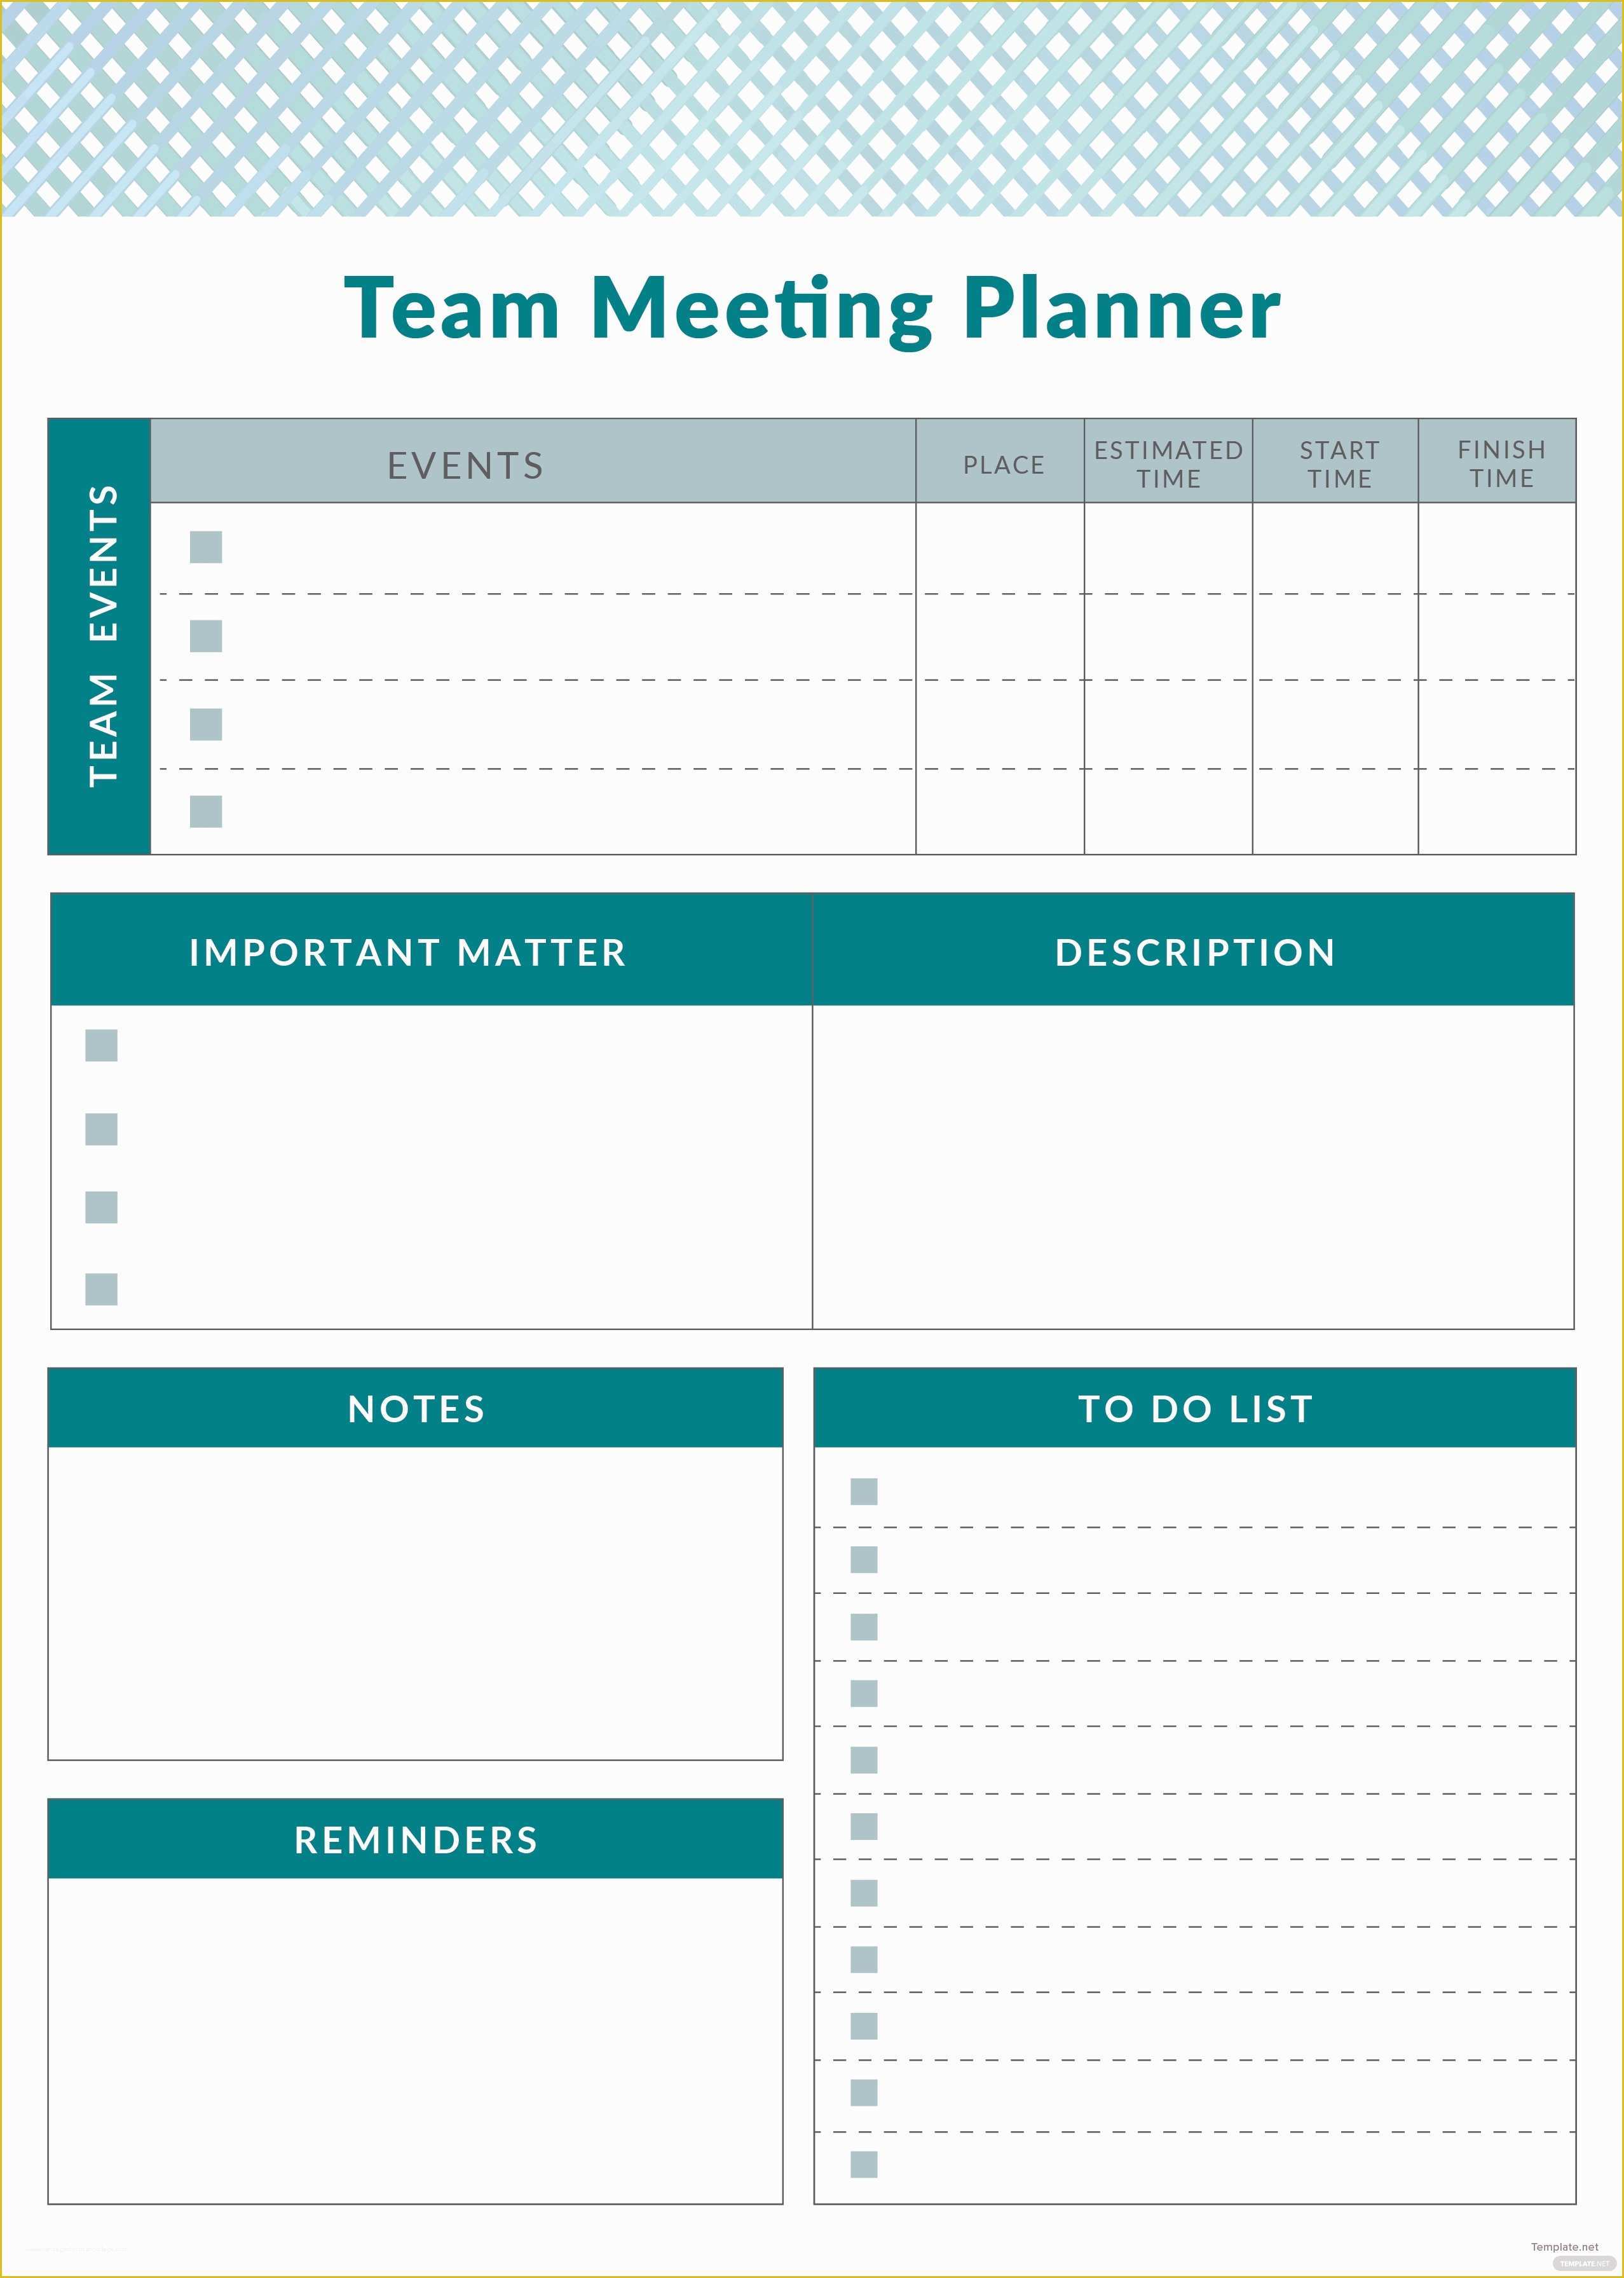 Free Meeting Planning Templates Of Free Team Meeting Planner Template In Adobe Illustrator